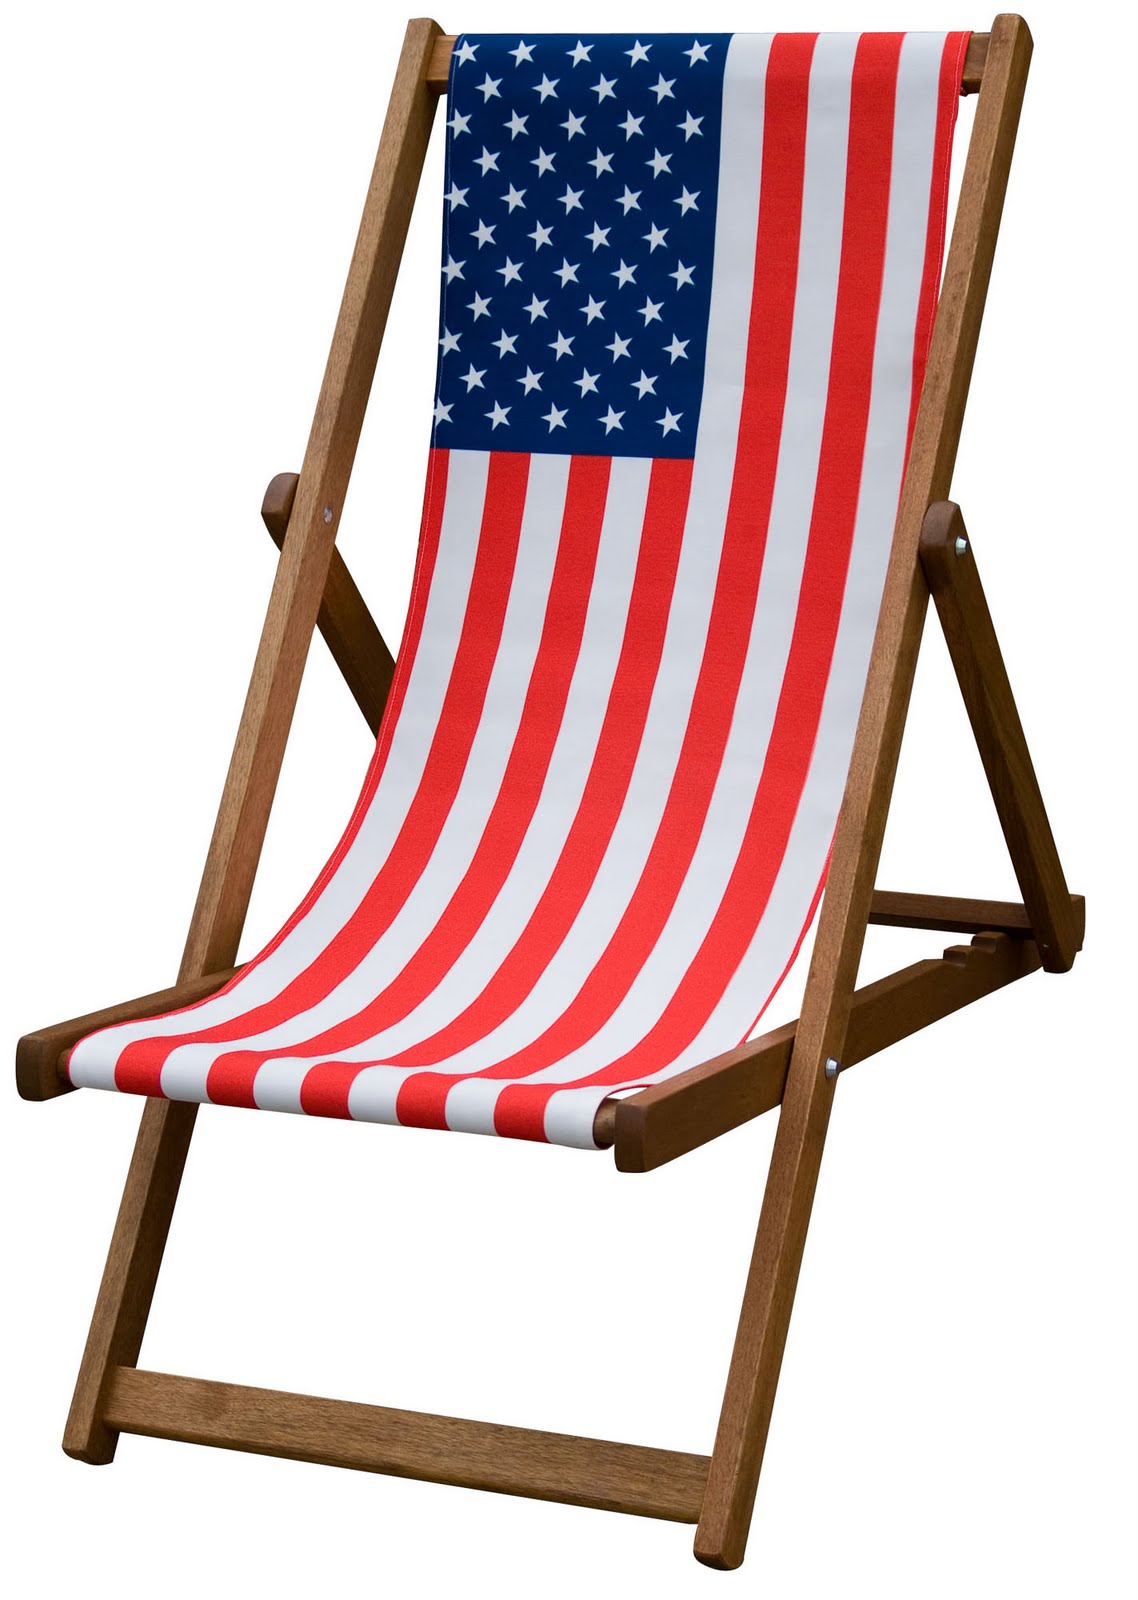 http://1.bp.blogspot.com/-GI_DAEdRhAk/Th6uJj9rk6I/AAAAAAAAA58/5Q8C25xtliQ/s1600/American+Flag+Deckchair.jpg